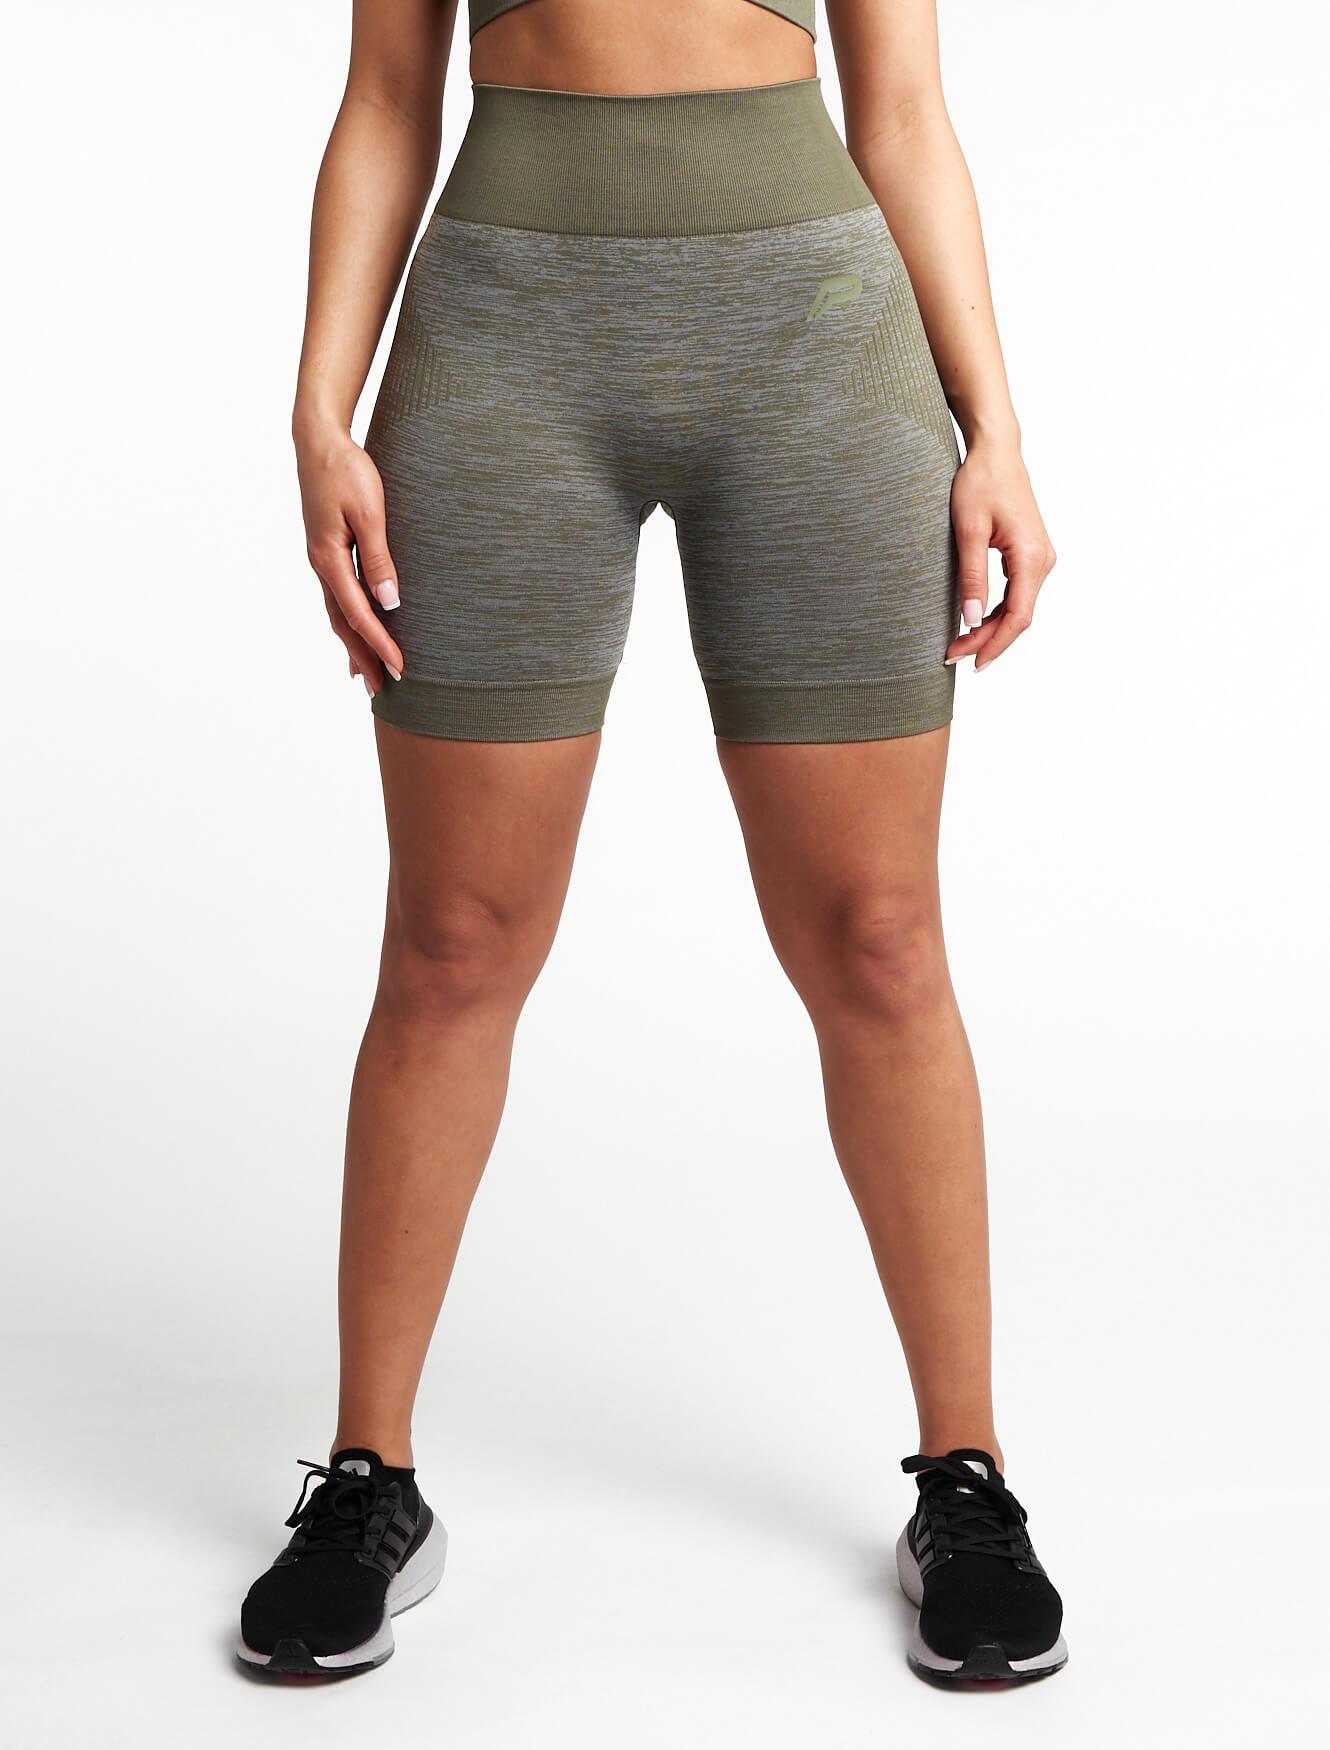 ADAPT Seamless Shorts / Khaki Pursue Fitness 7